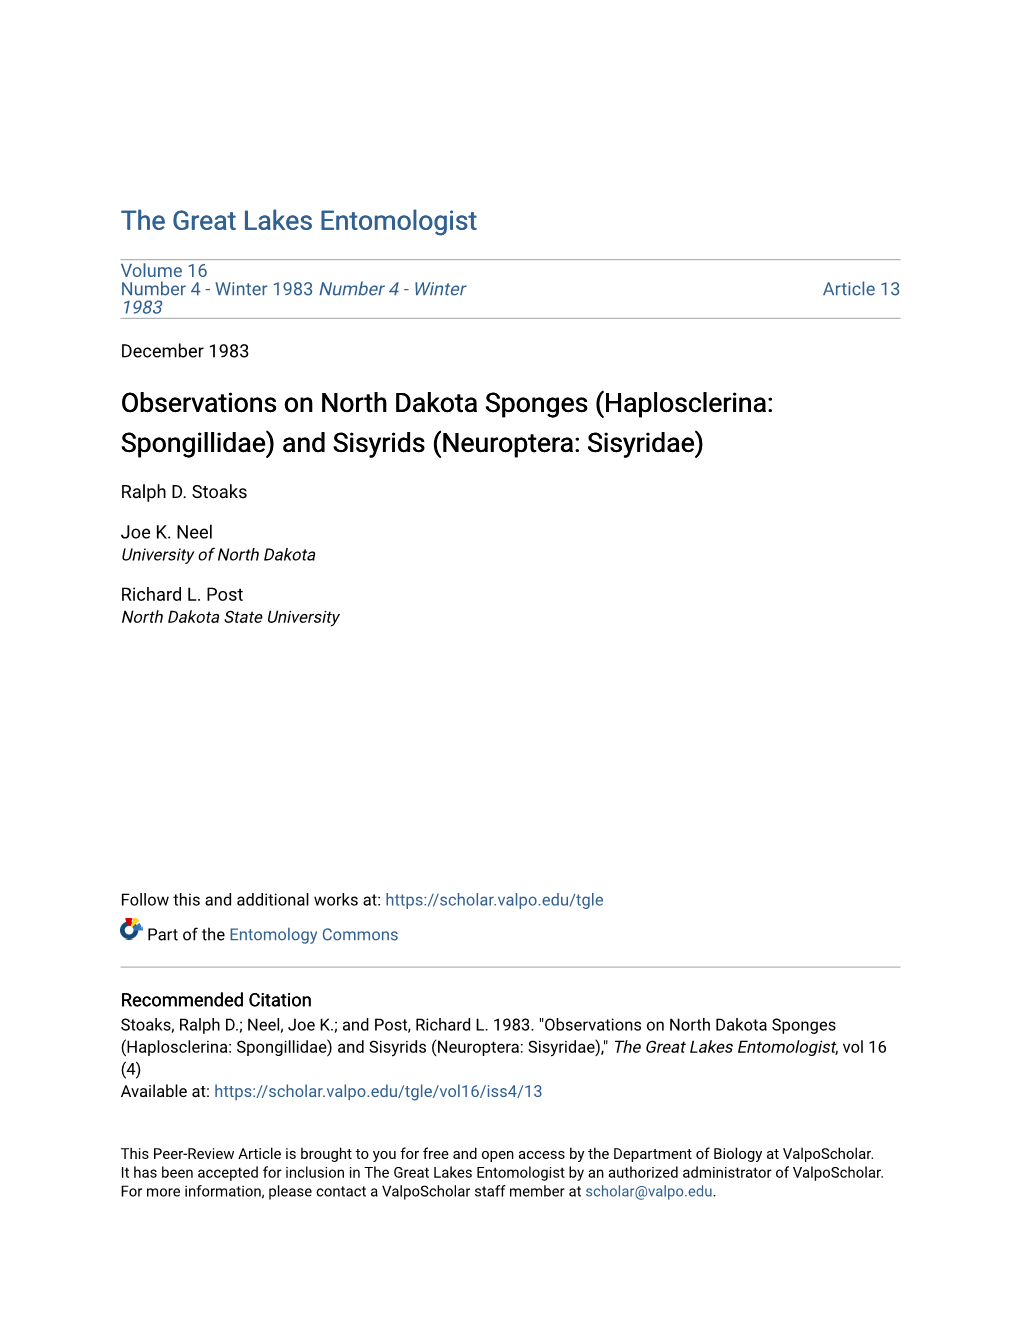 Observations on North Dakota Sponges (Haplosclerina: Spongillidae) and Sisyrids (Neuroptera: Sisyridae)